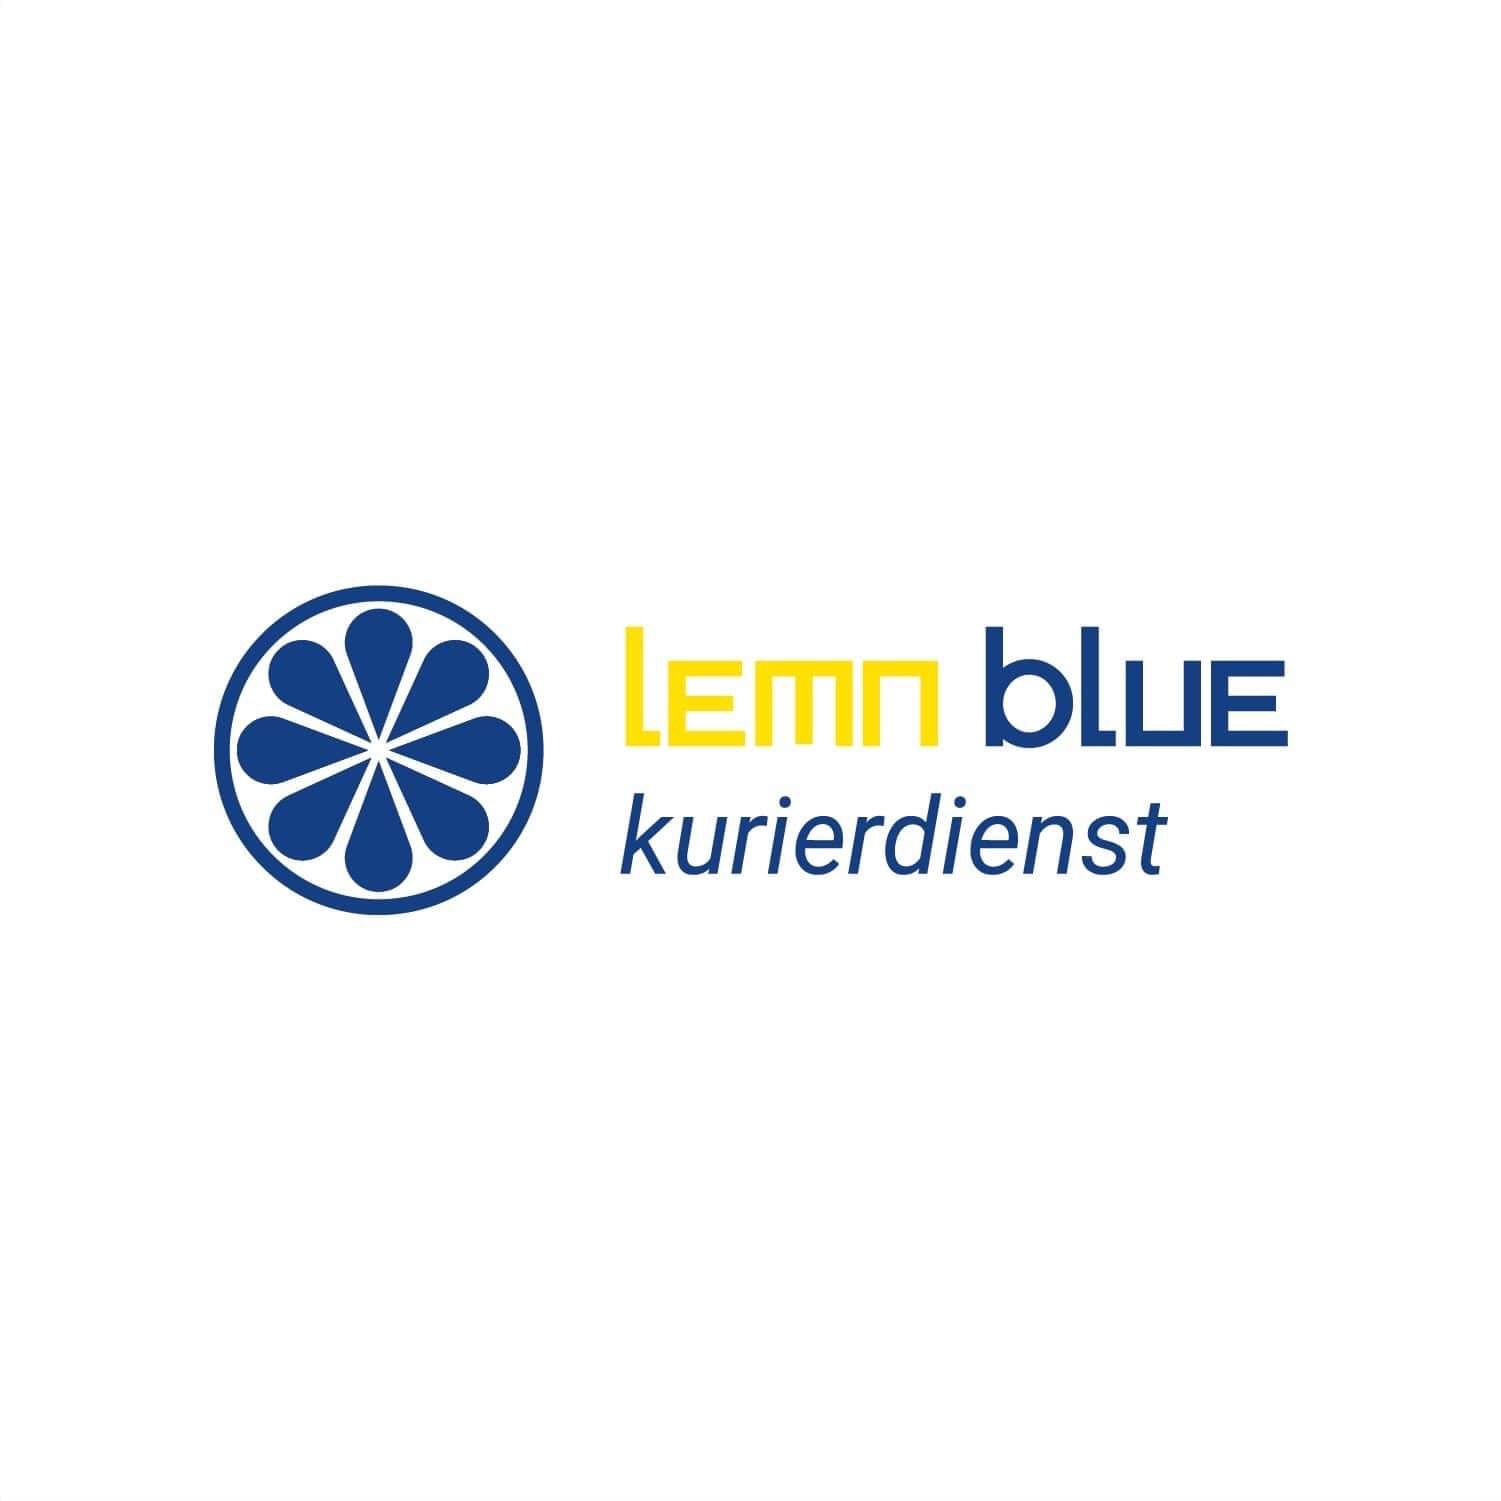 lemn blue - kurierdienst Logo